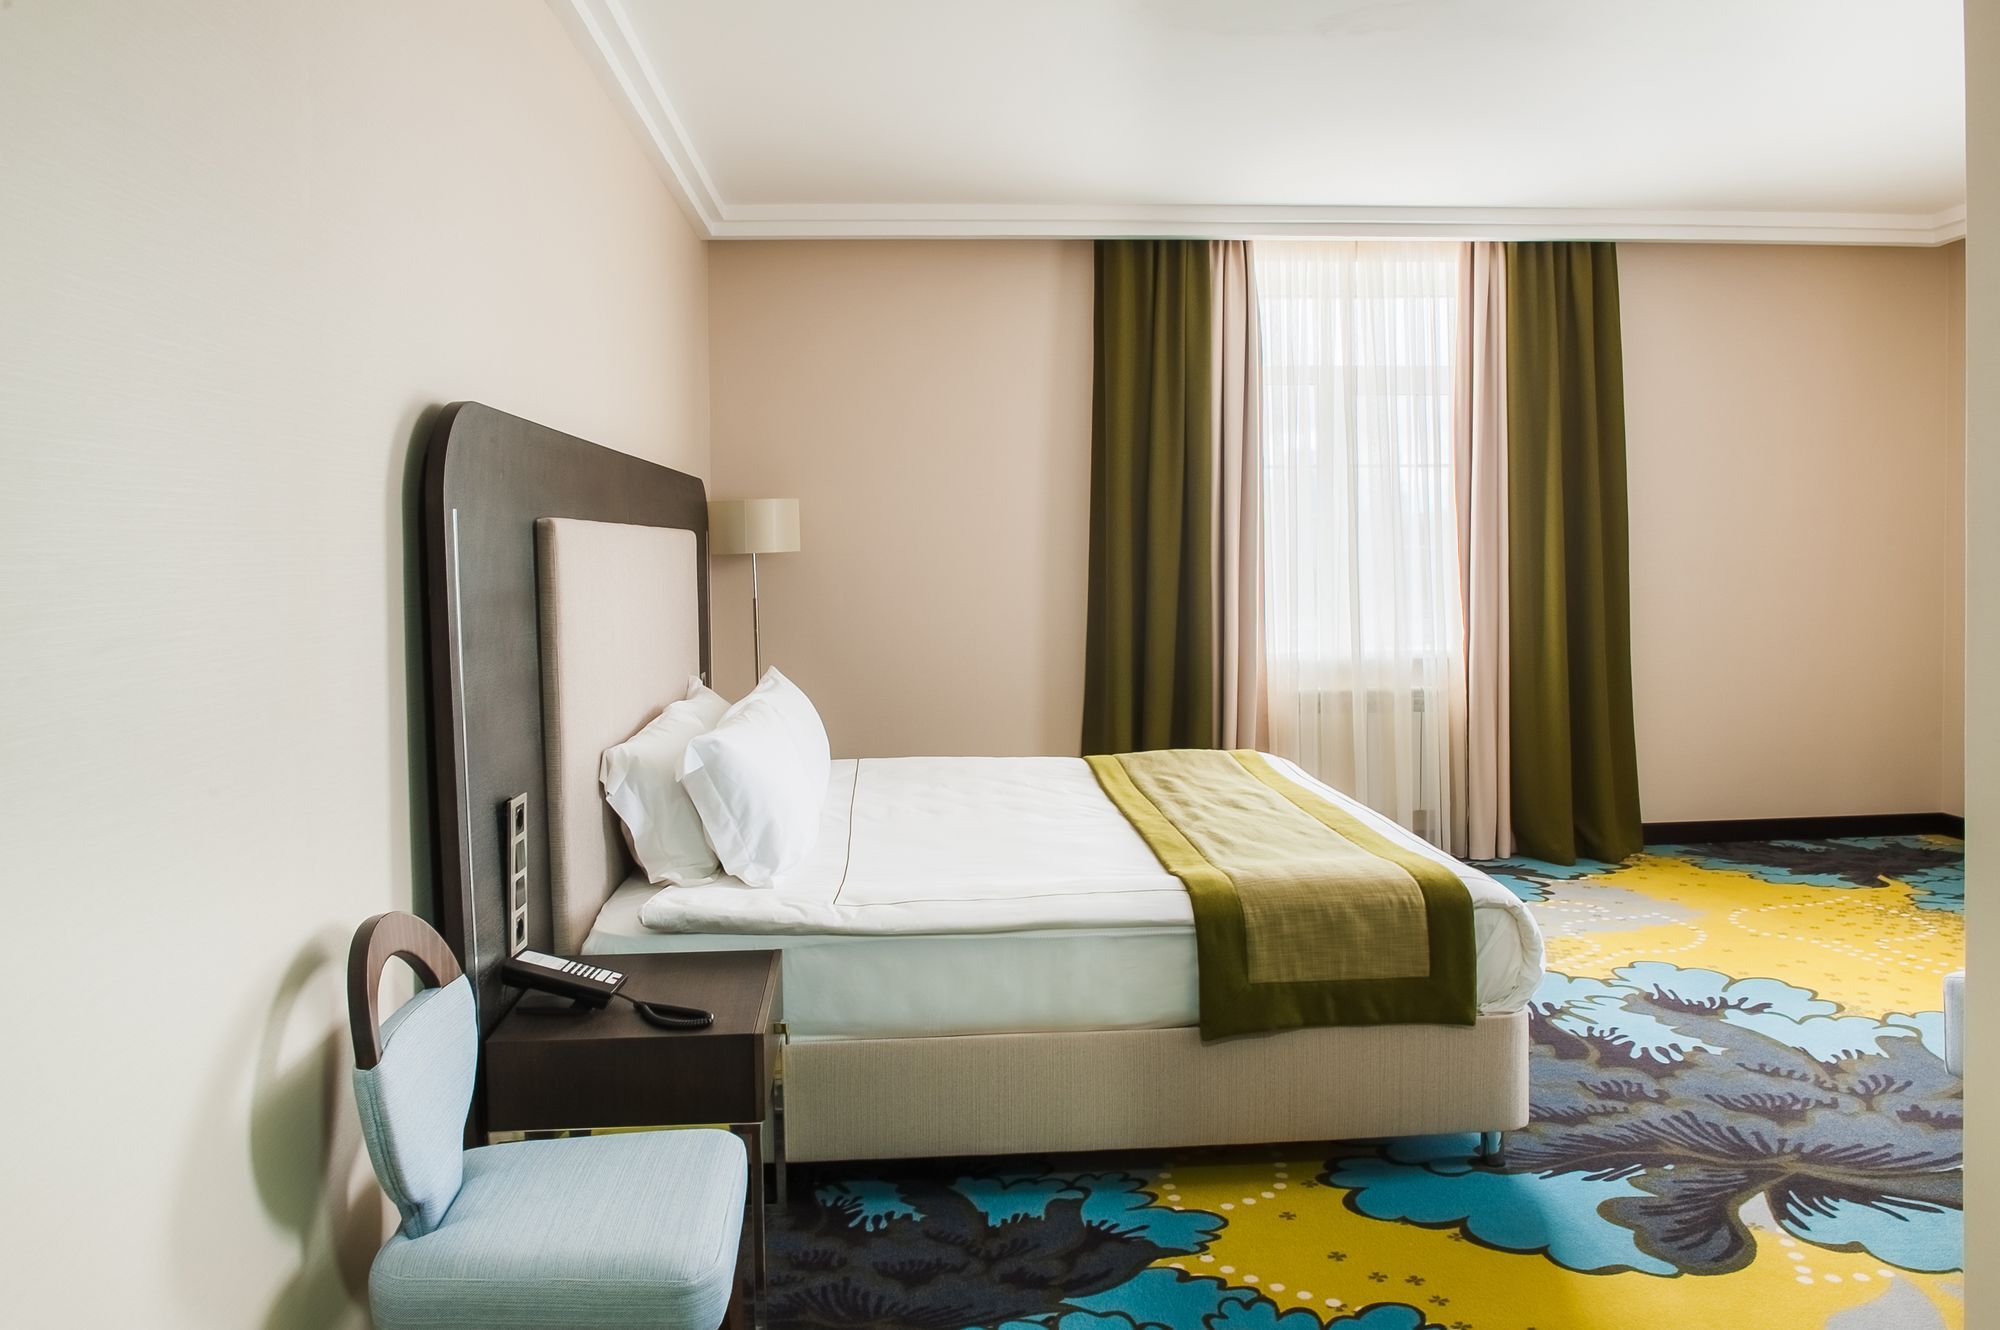 The One Hotel Astana Экстерьер фото